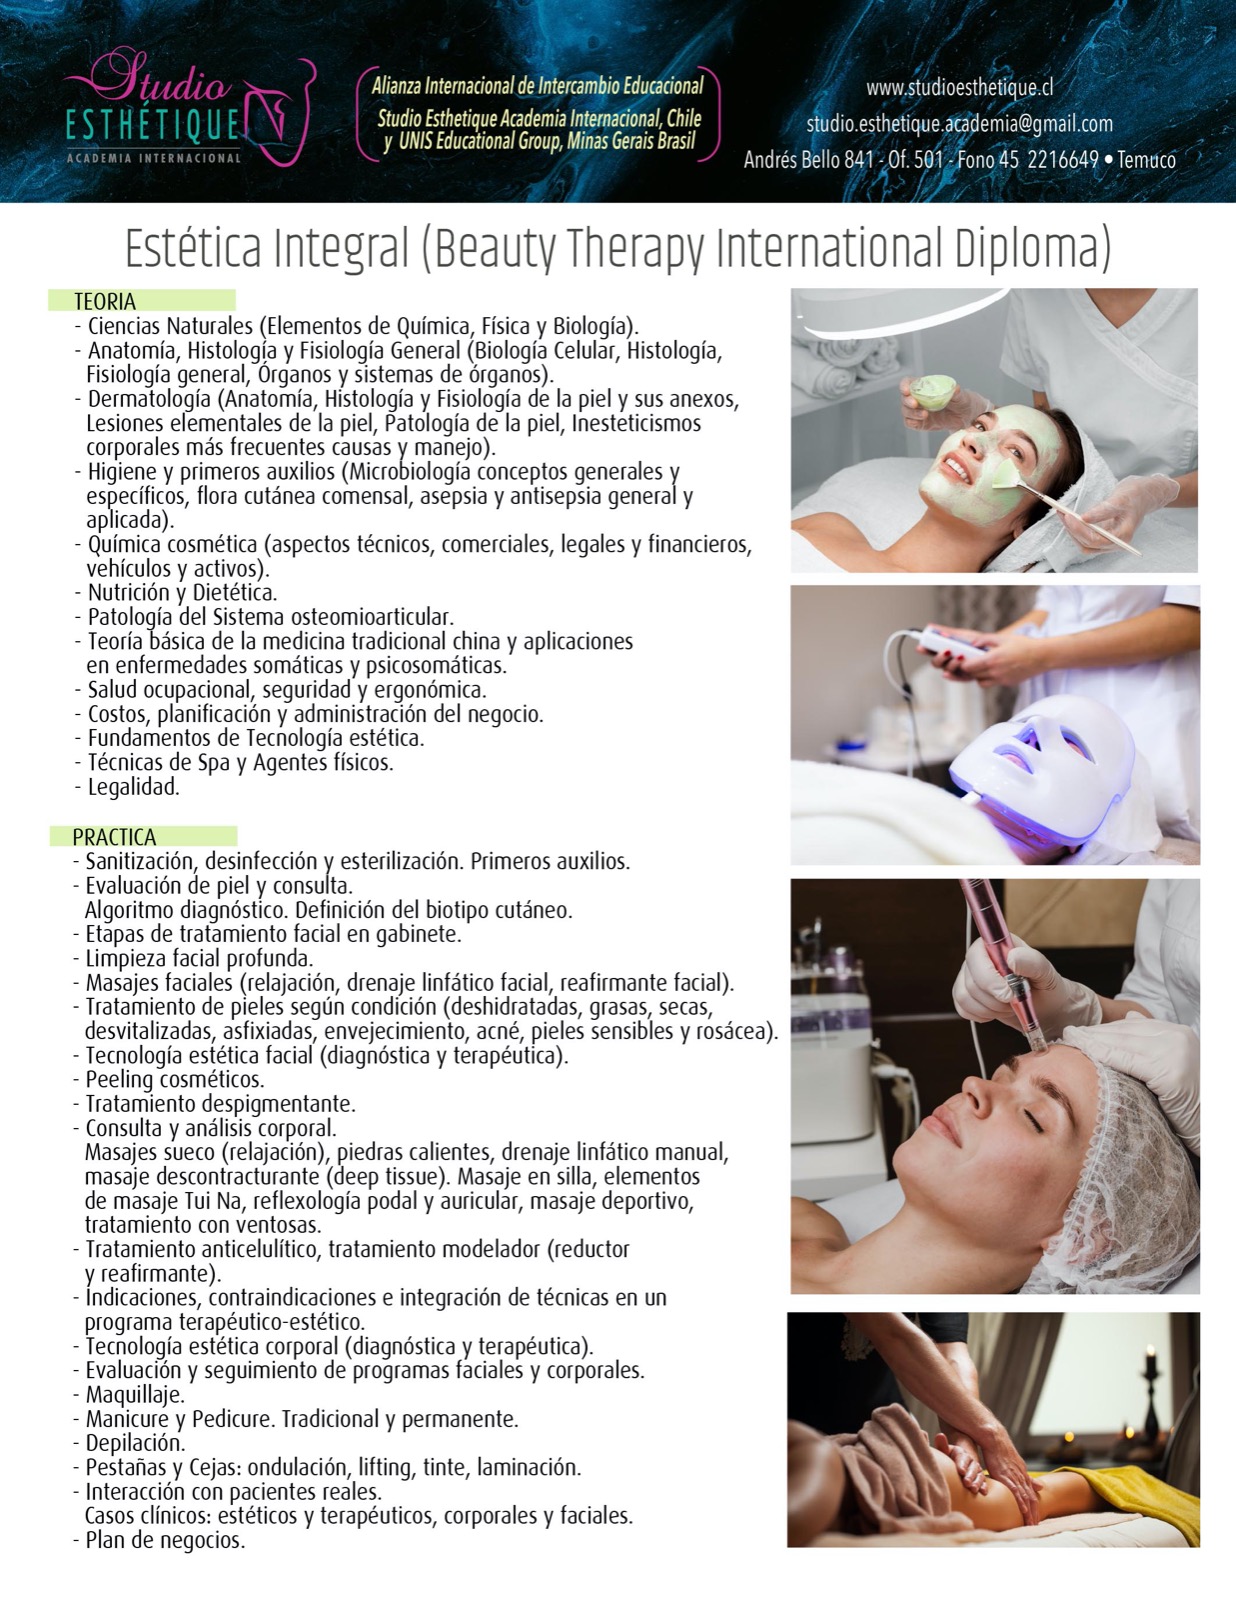 beauty therapy, cosmetología, estética integral, masoterapia